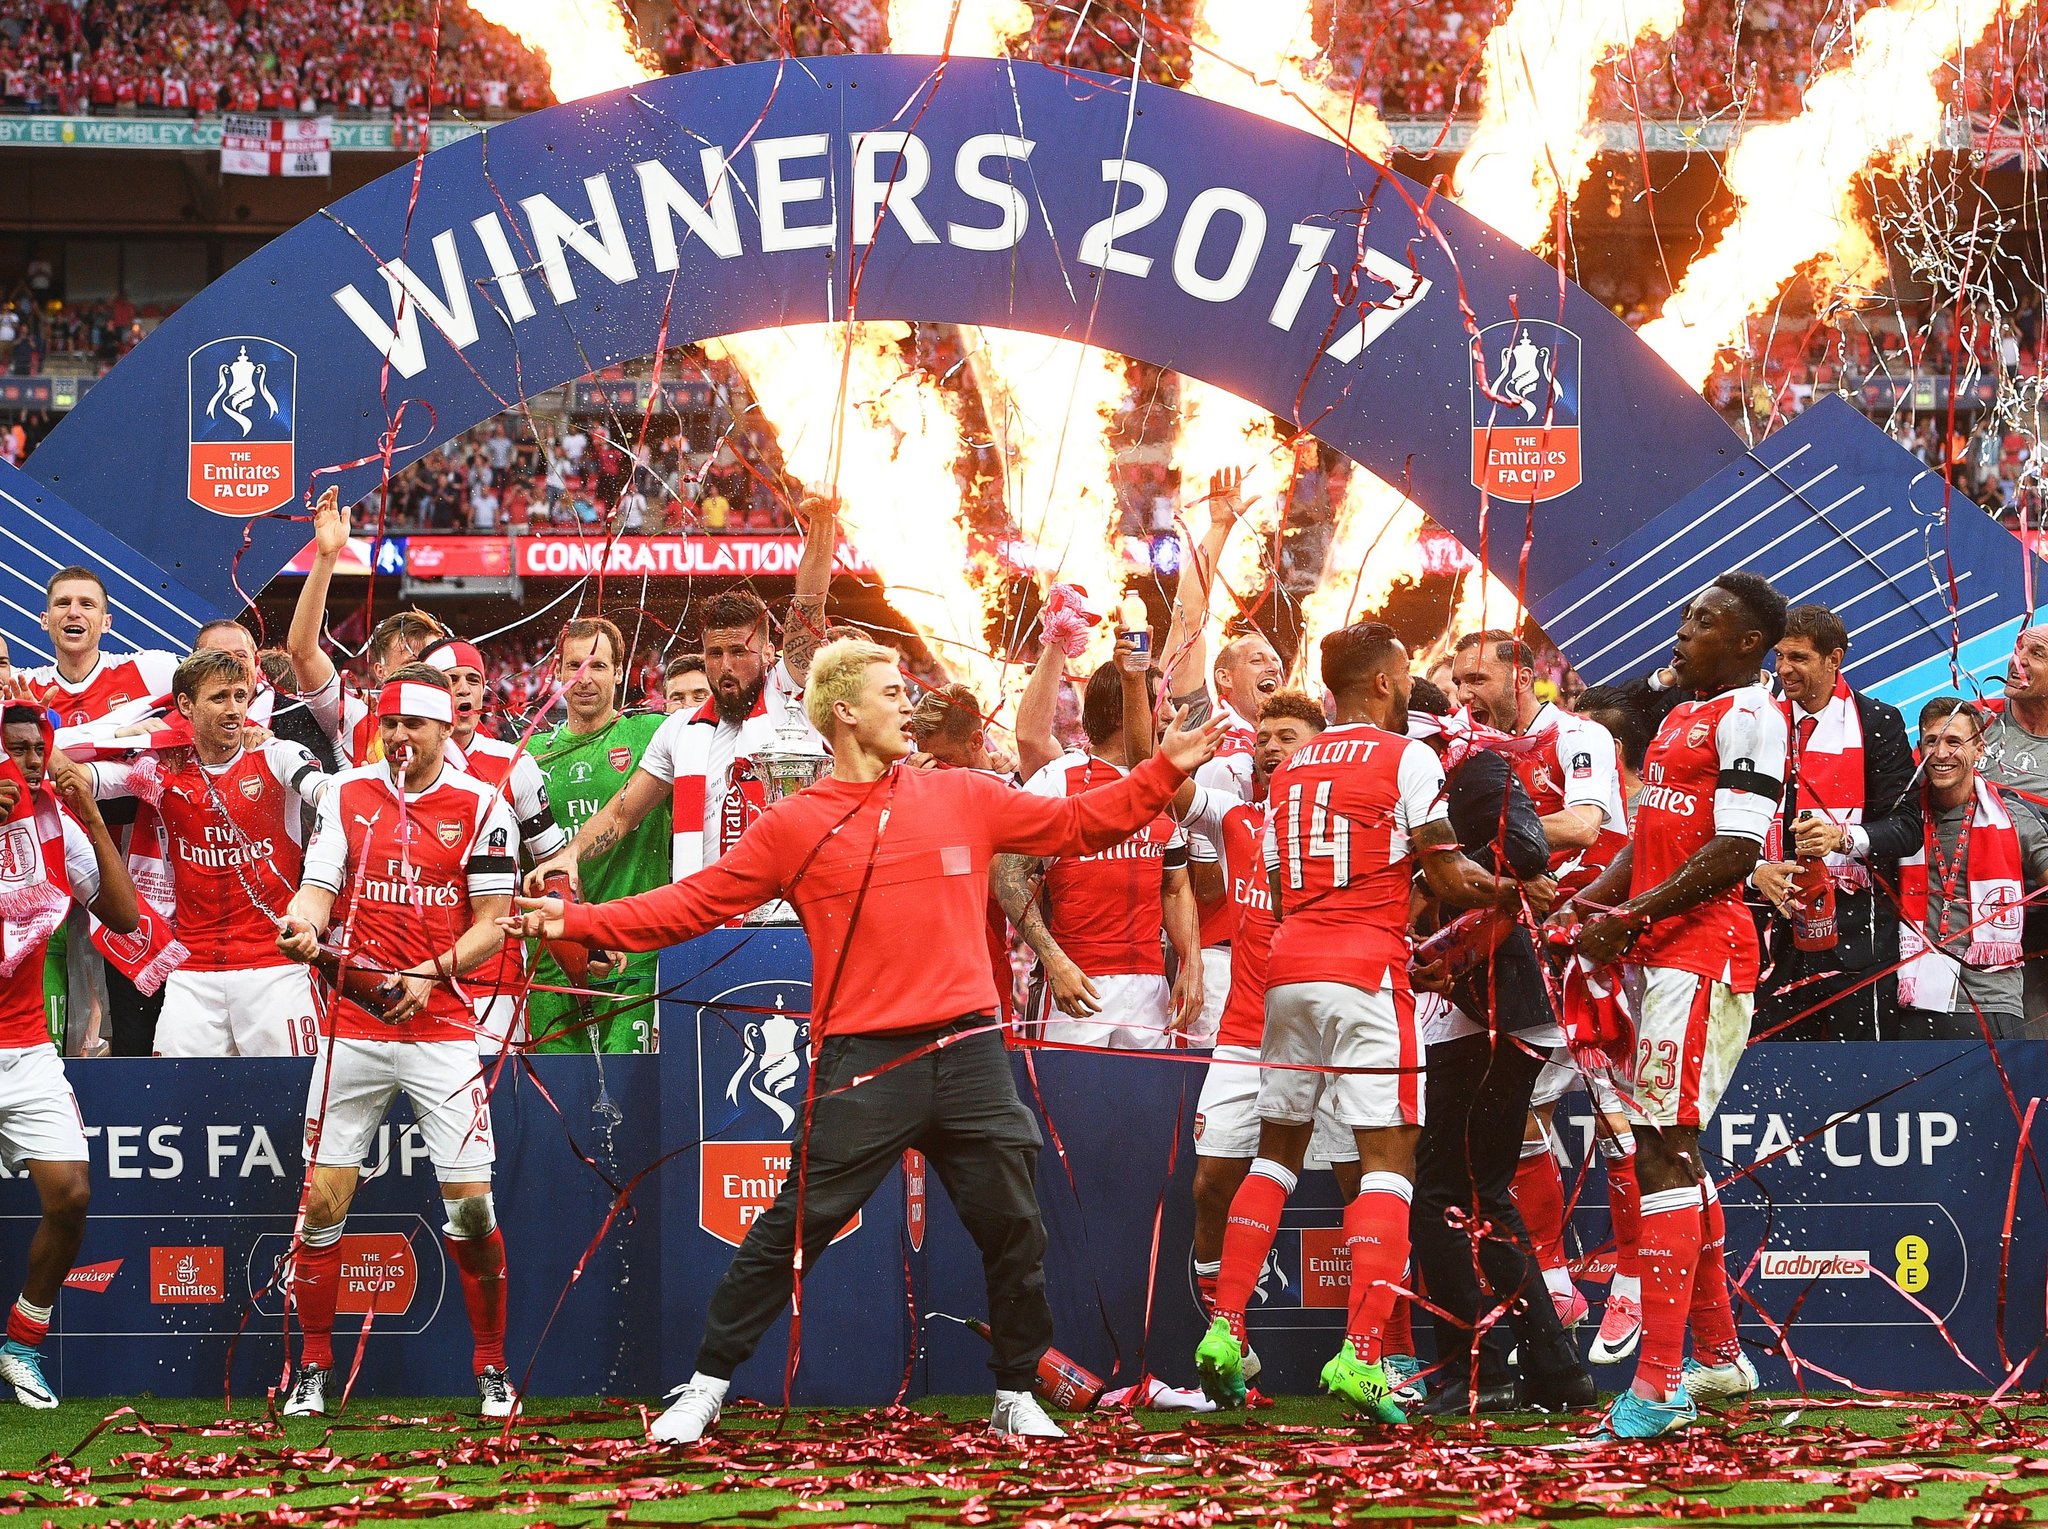 2017: The Arsenal club wins FA Cup